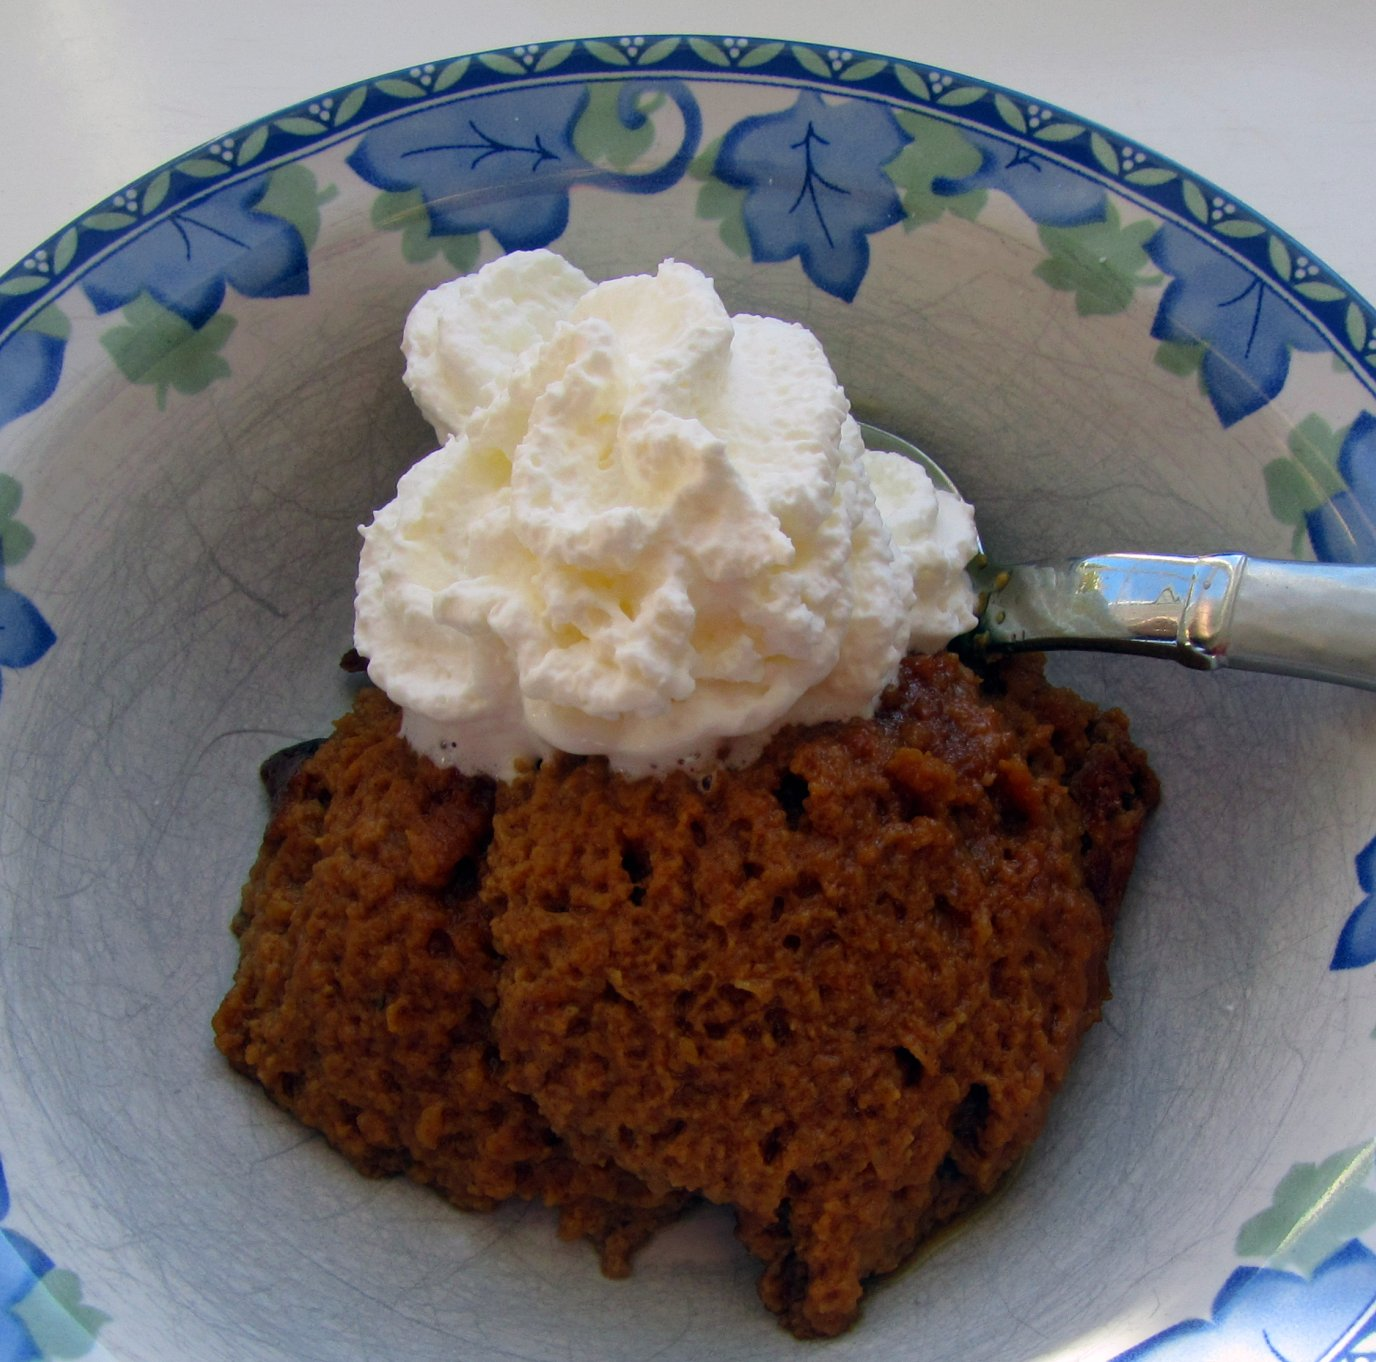 image via lynn.gardner on Flickr “Slow Cooker Indian Pudding” https://www.flickr.com/photos/grandgrrl/6732166023/